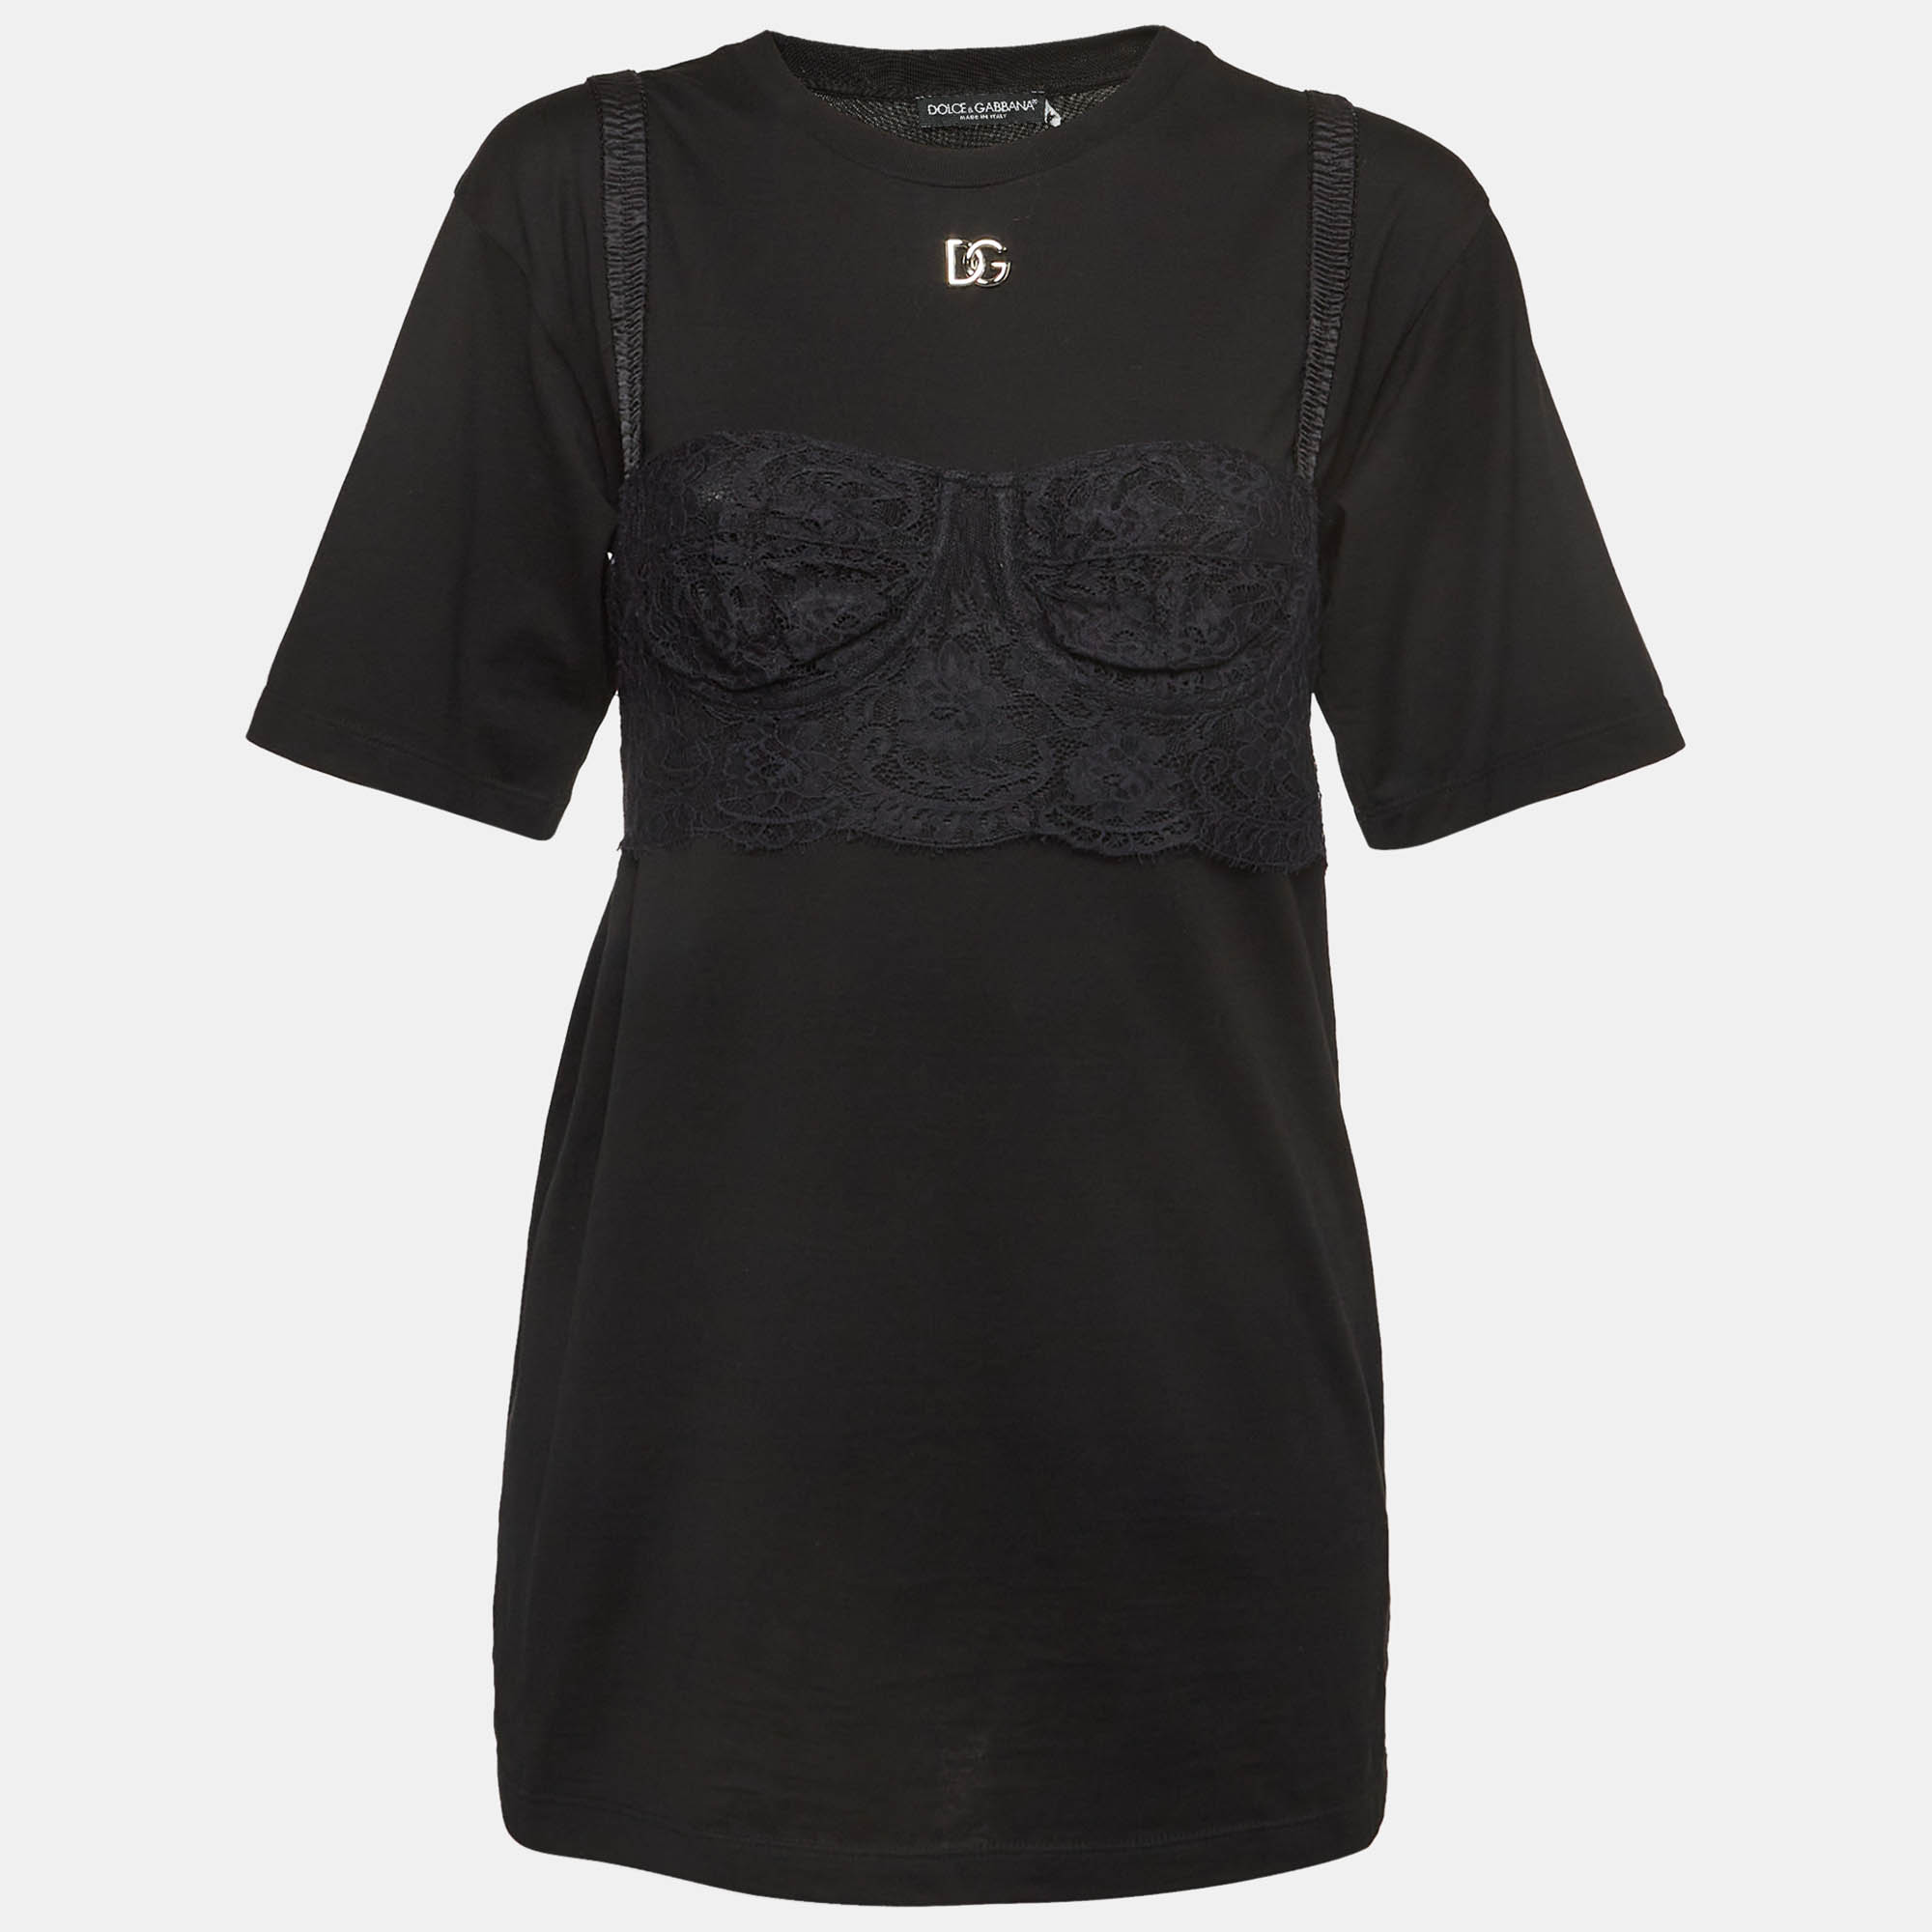 Dolce & gabbana black cotton knit lace bralette detail t-shirt s